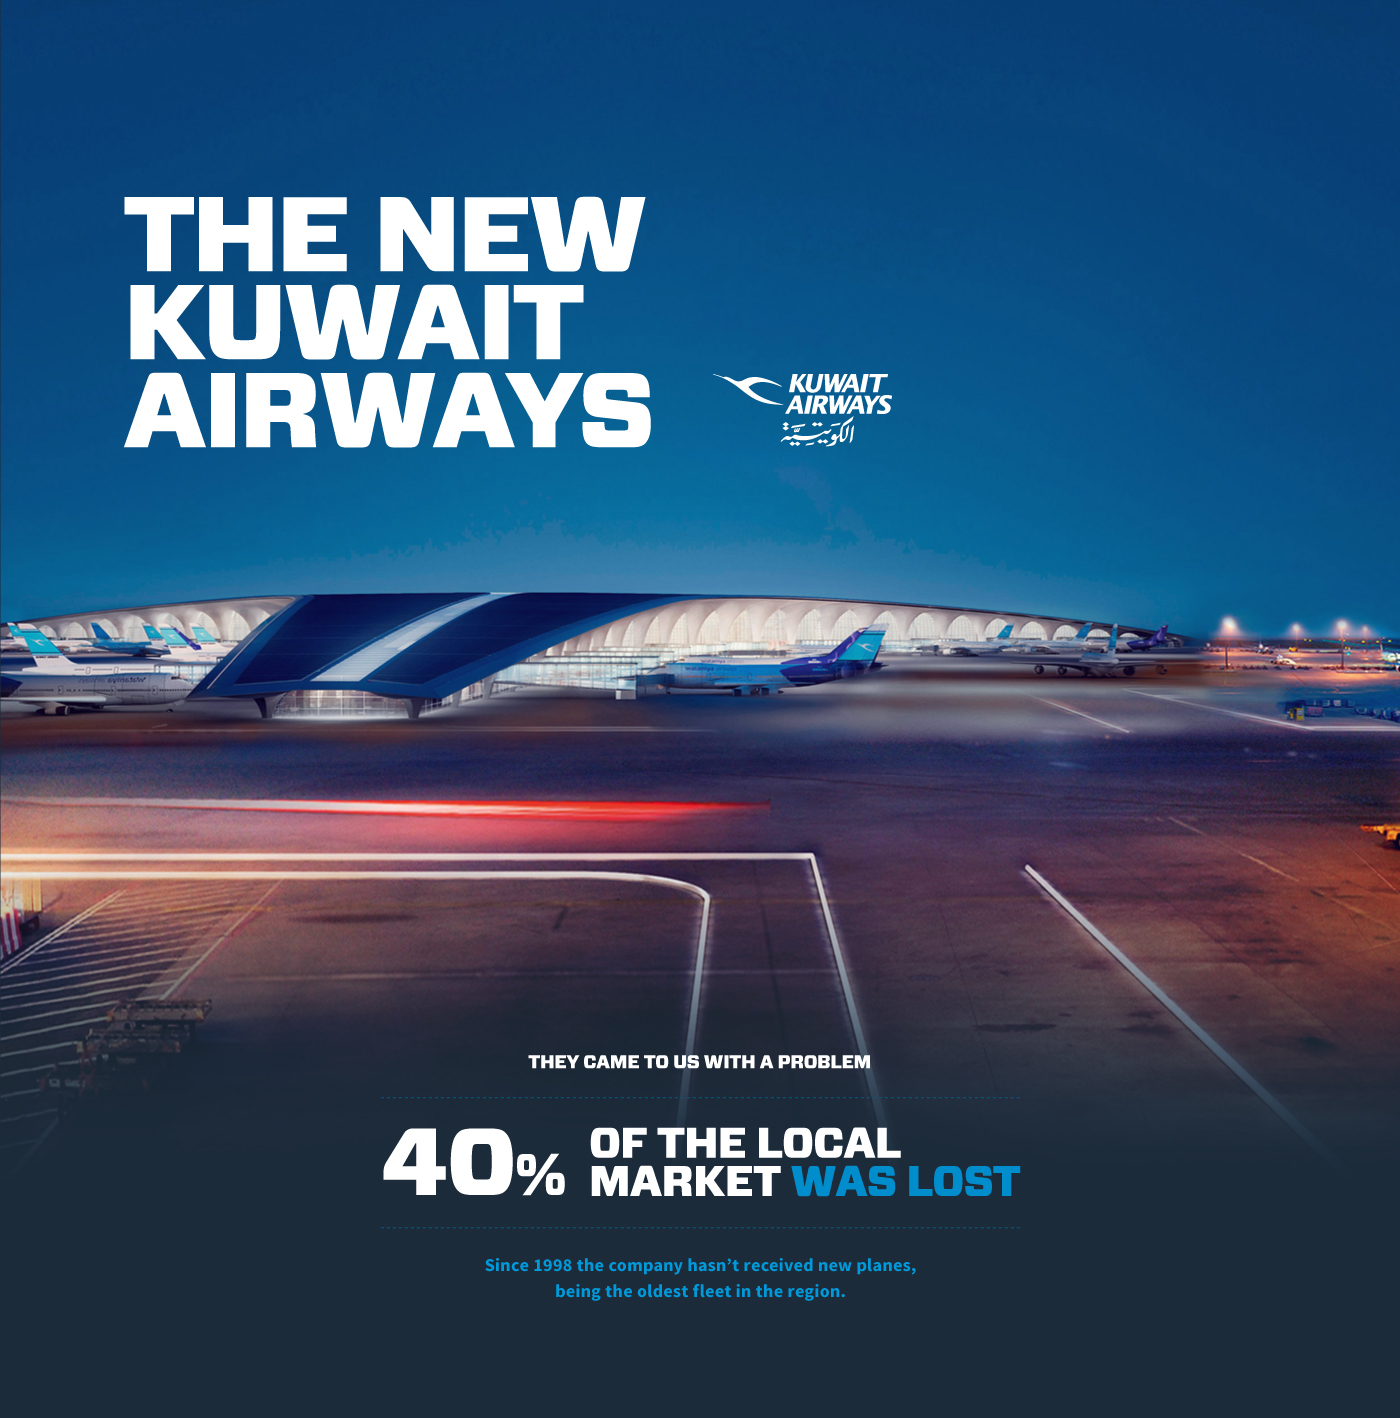 airplane airline Kuwait plane Airways airport middle east Arab cultural dhnn air digital pattern modern ux